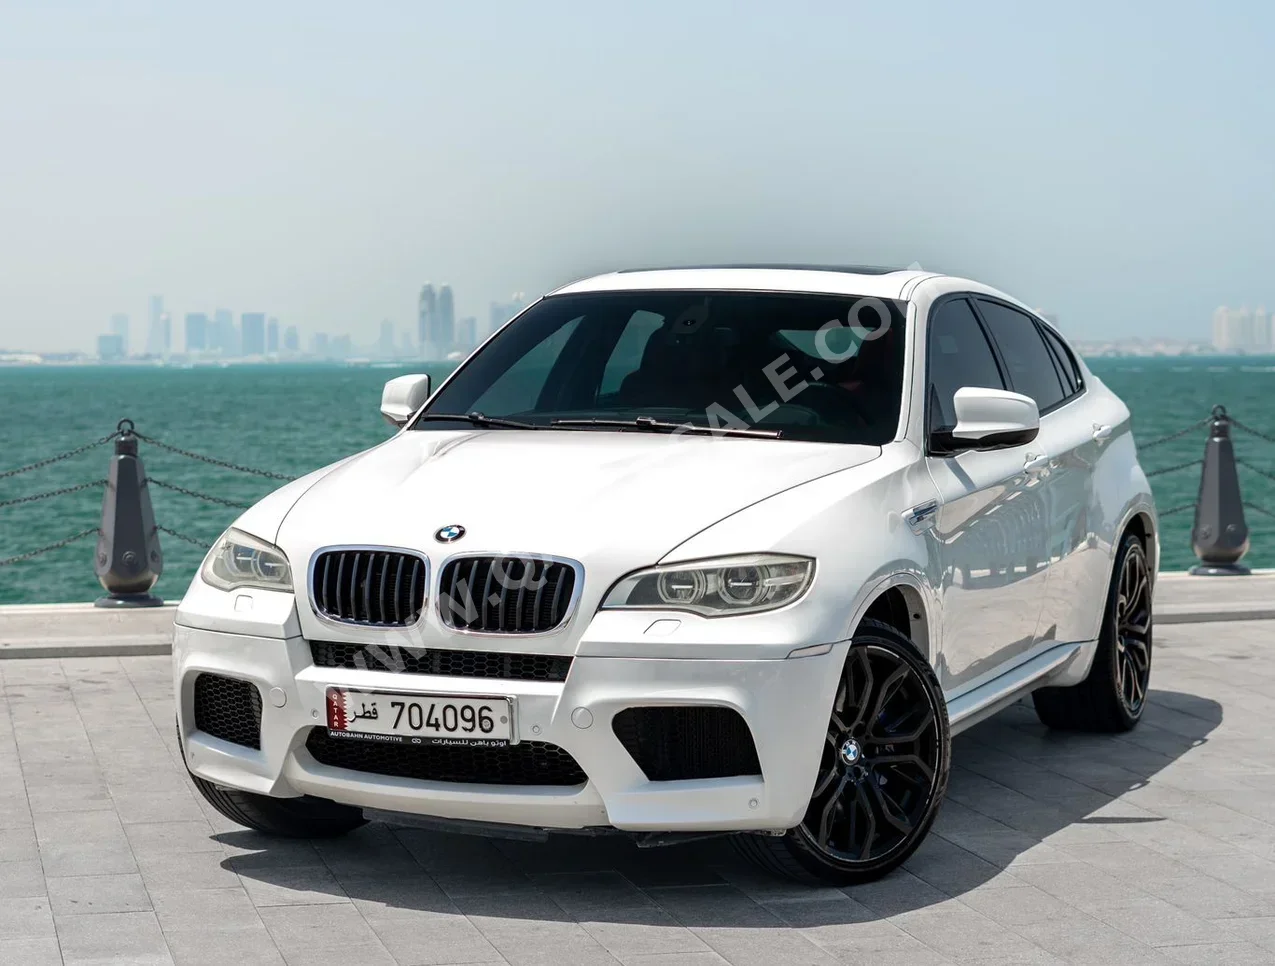 BMW  X-Series  X6 M  2014  Automatic  100,000 Km  8 Cylinder  Four Wheel Drive (4WD)  SUV  White